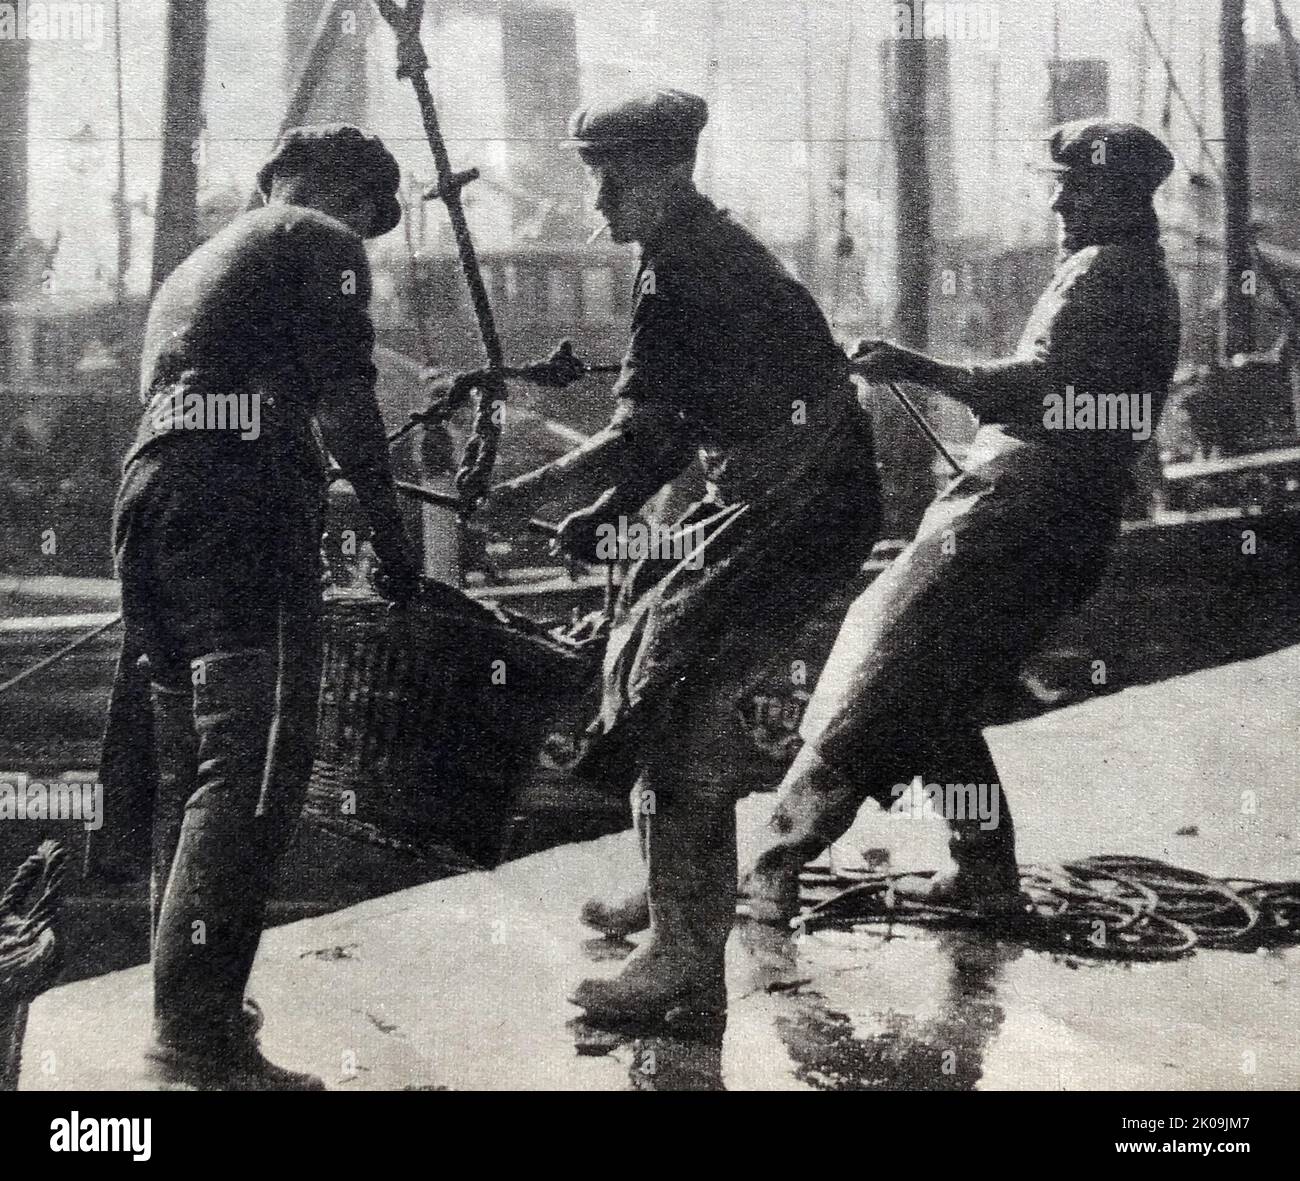 English fishermen offload a catch during World War II, 1941. Stock Photo